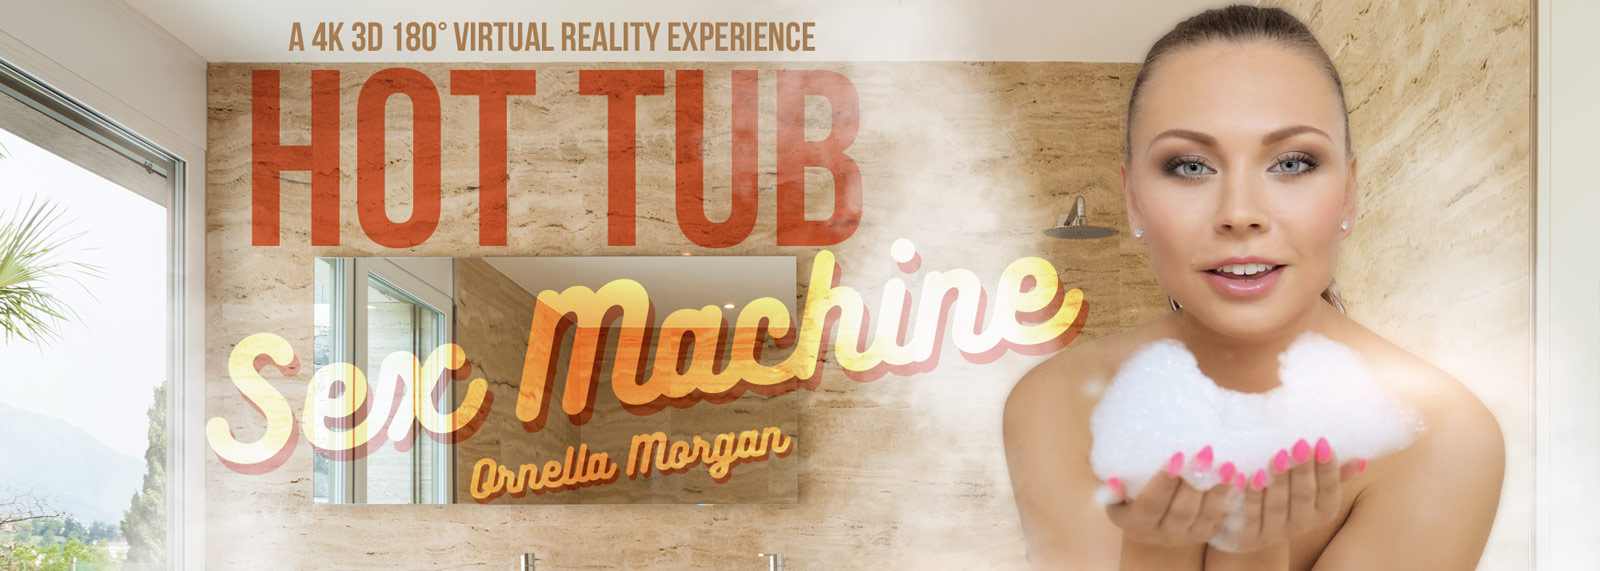 Hot Tub Sex Machine with Ornella Morgan  Slideshow